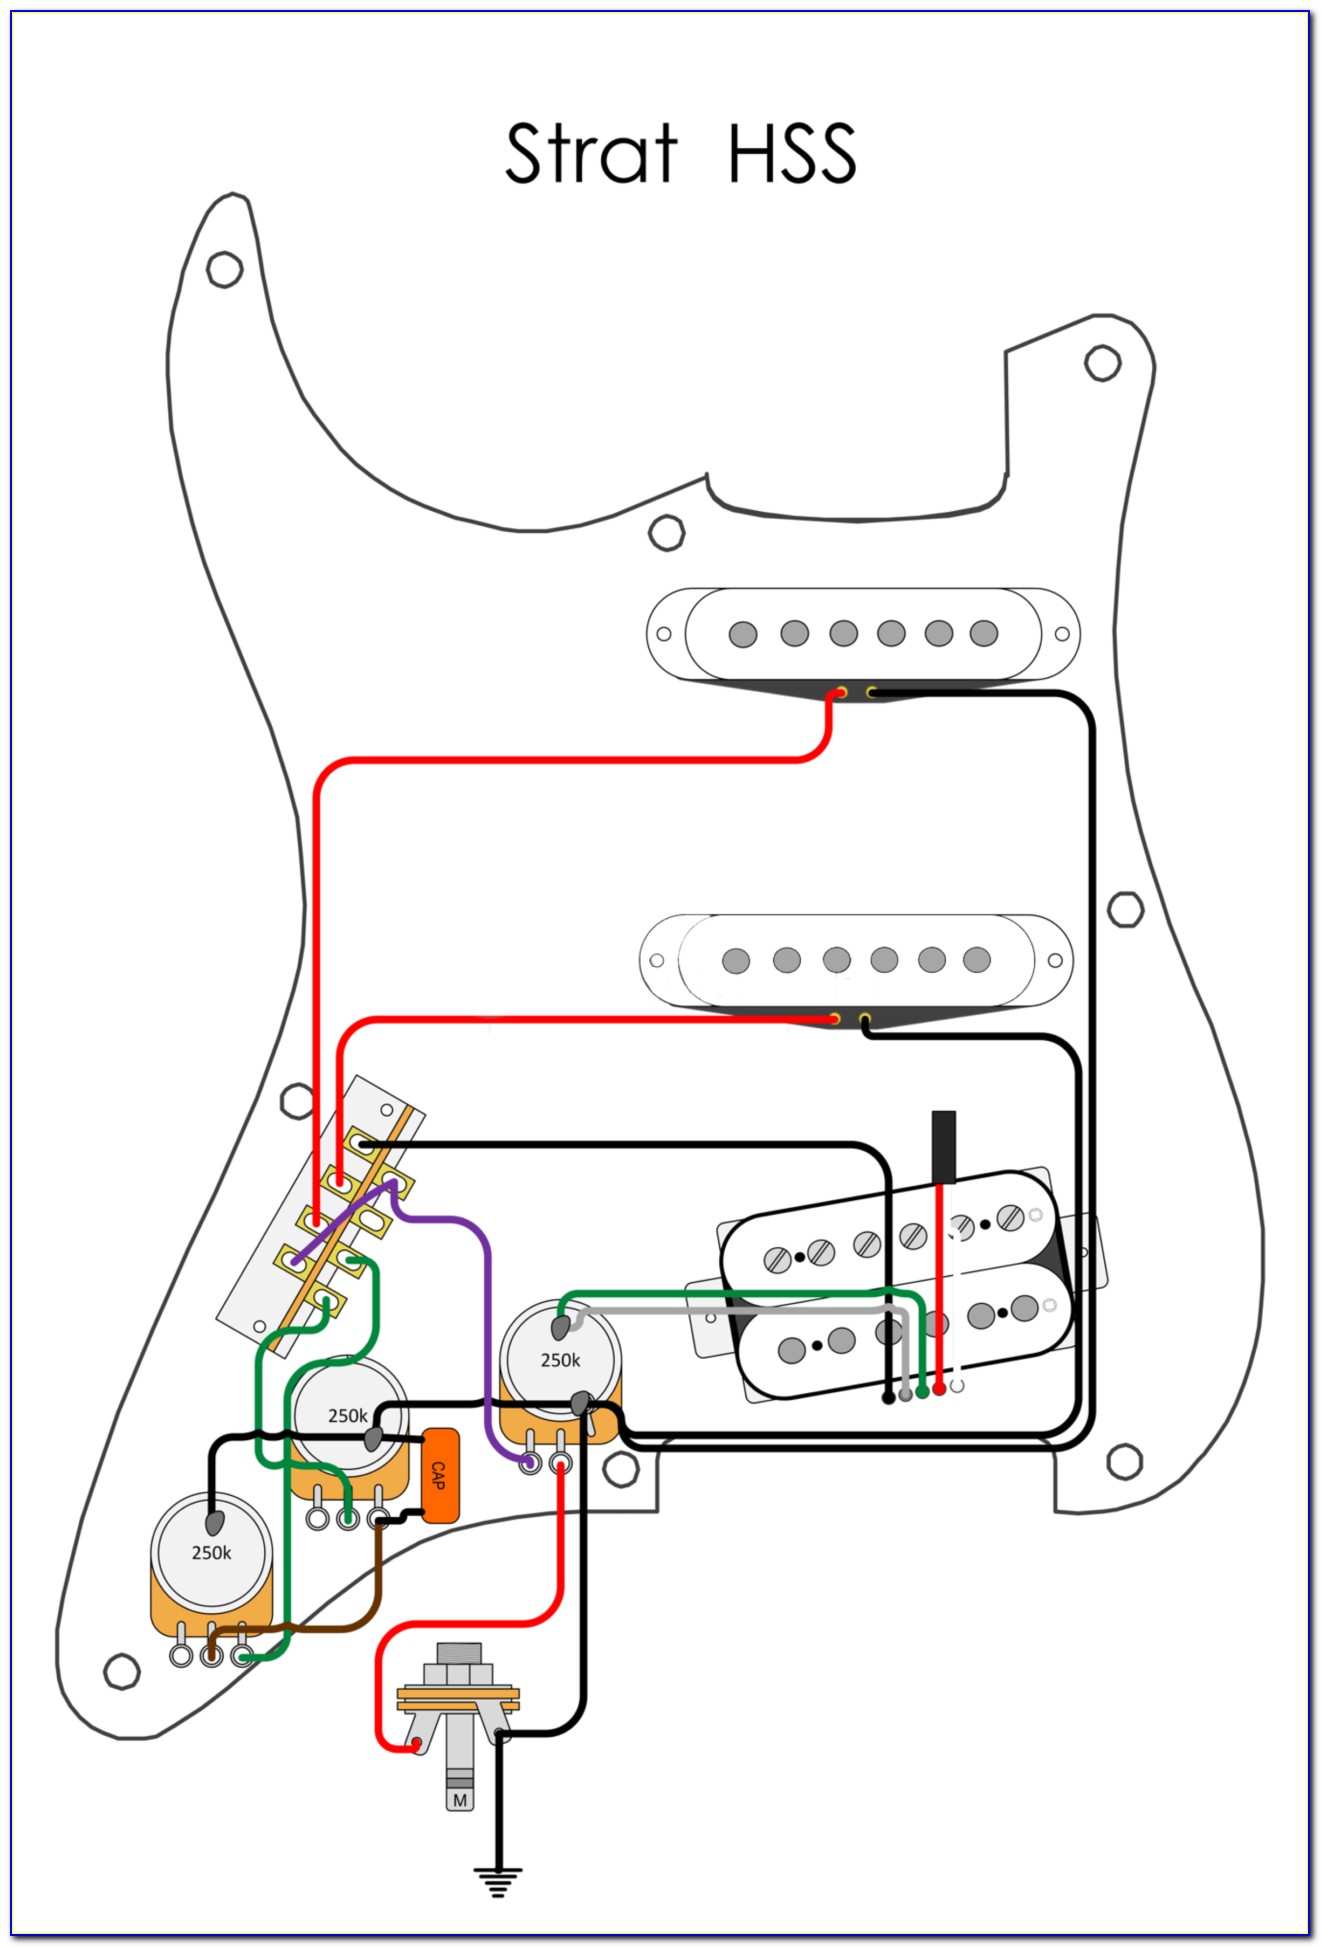 Stratocaster Wiring Diagram Hss